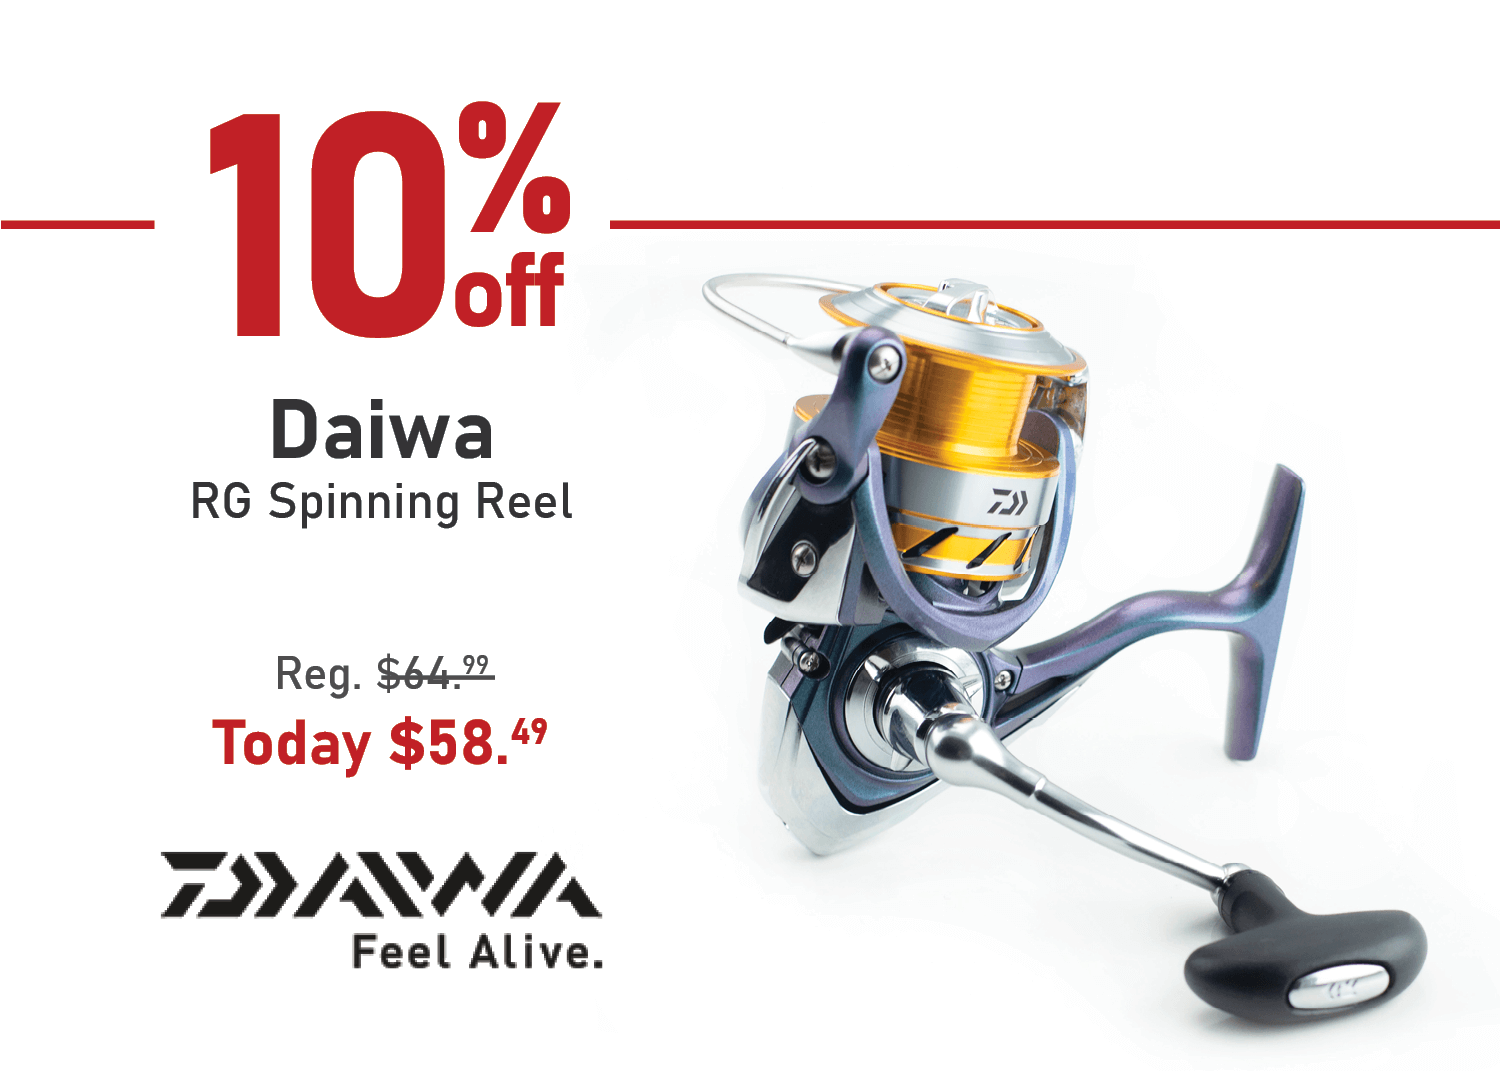 Save 10% on the Daiwa RG Spinning Reel